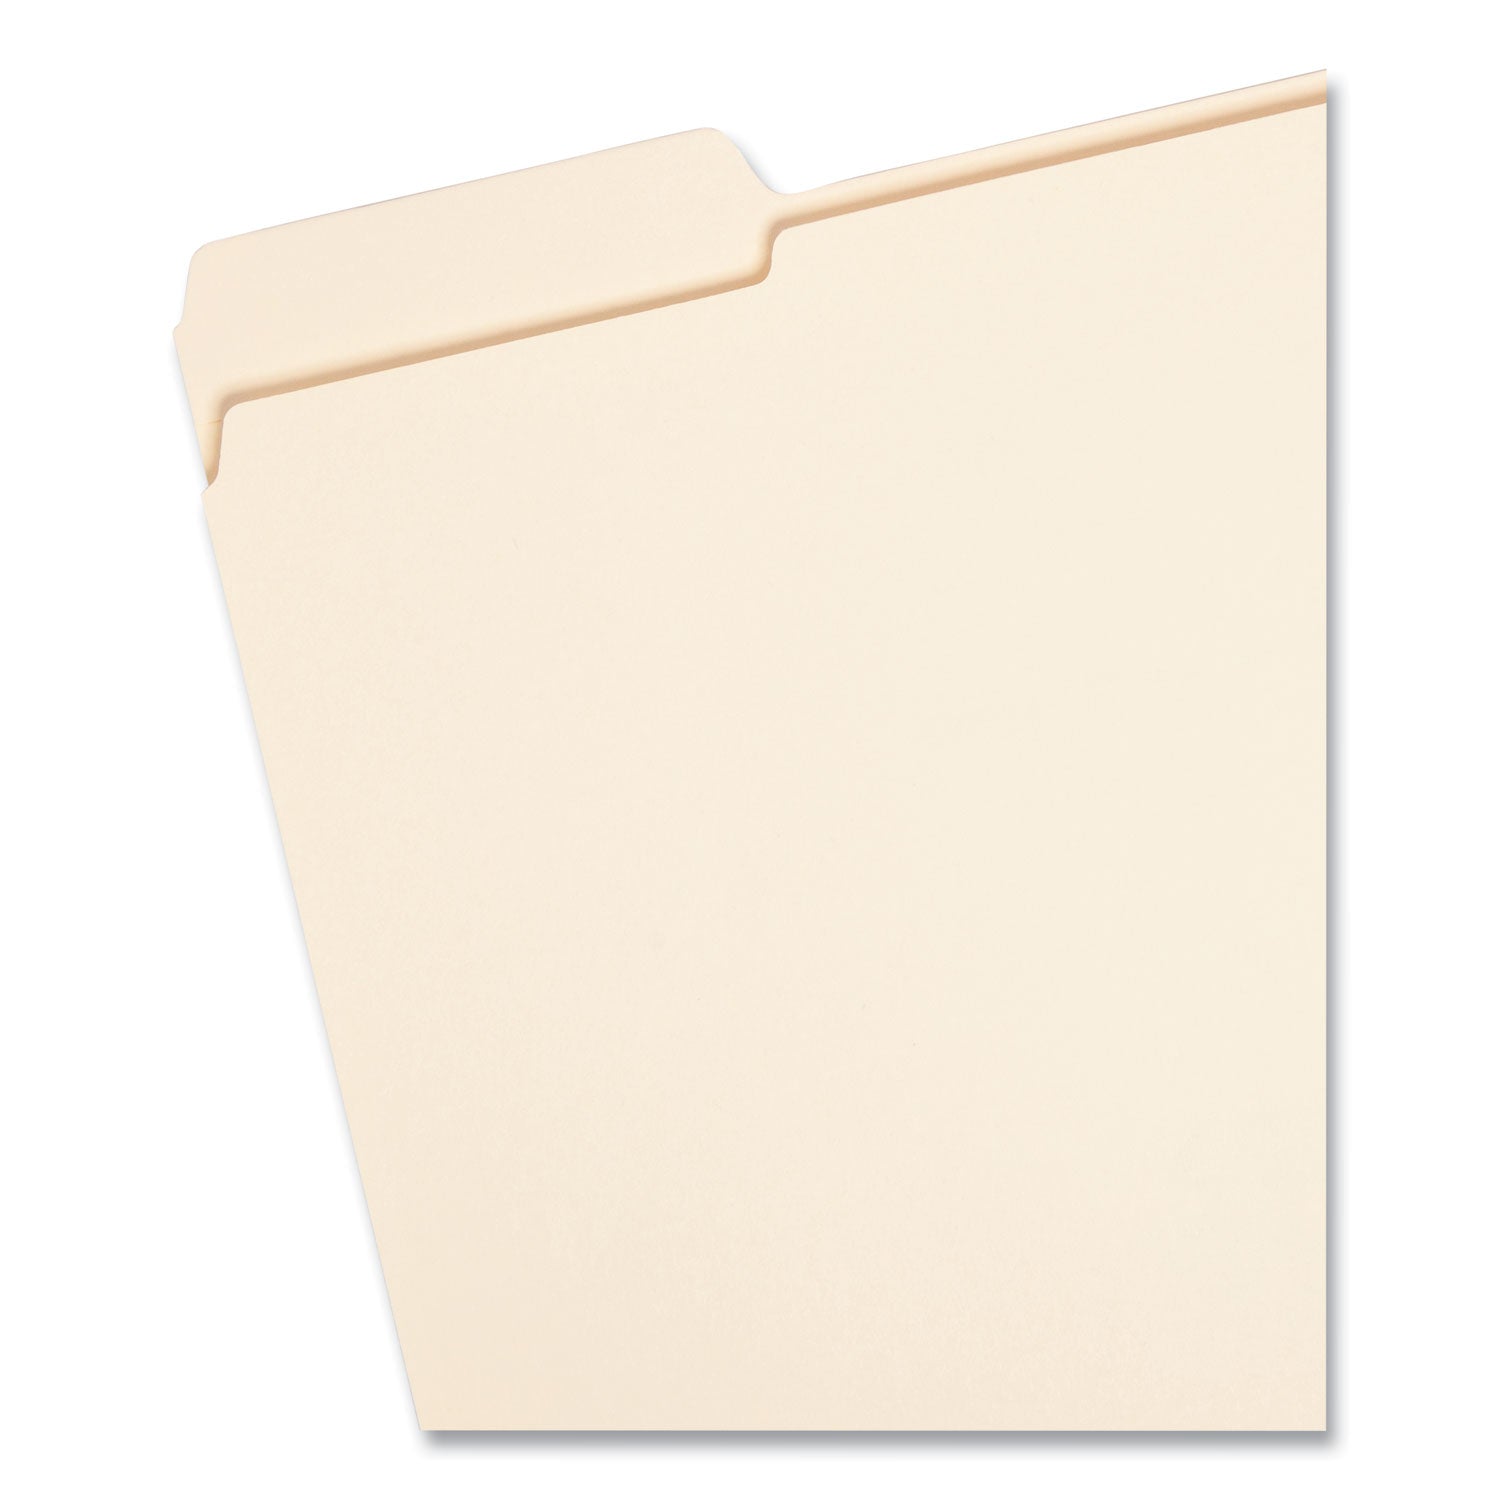 Reinforced Tab Manila File Folders, 1/3-Cut Tabs: Left Position, Letter Size, 0.75" Expansion, 11-pt Manila, 100/Box - 